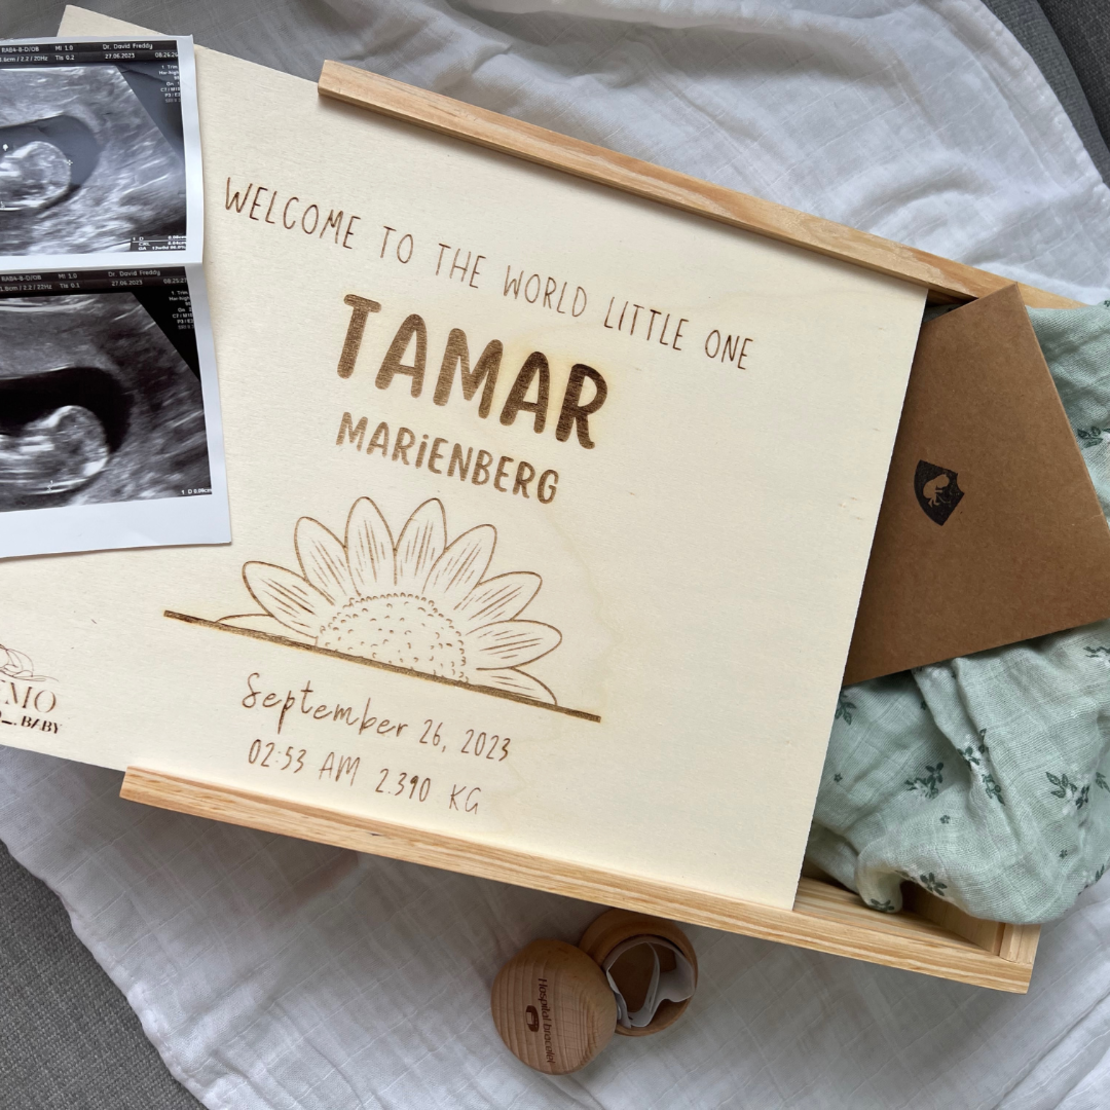 BABY FIRST MEMORIES BOX - קופסת זיכרונות לתינוק (בהרכבה)